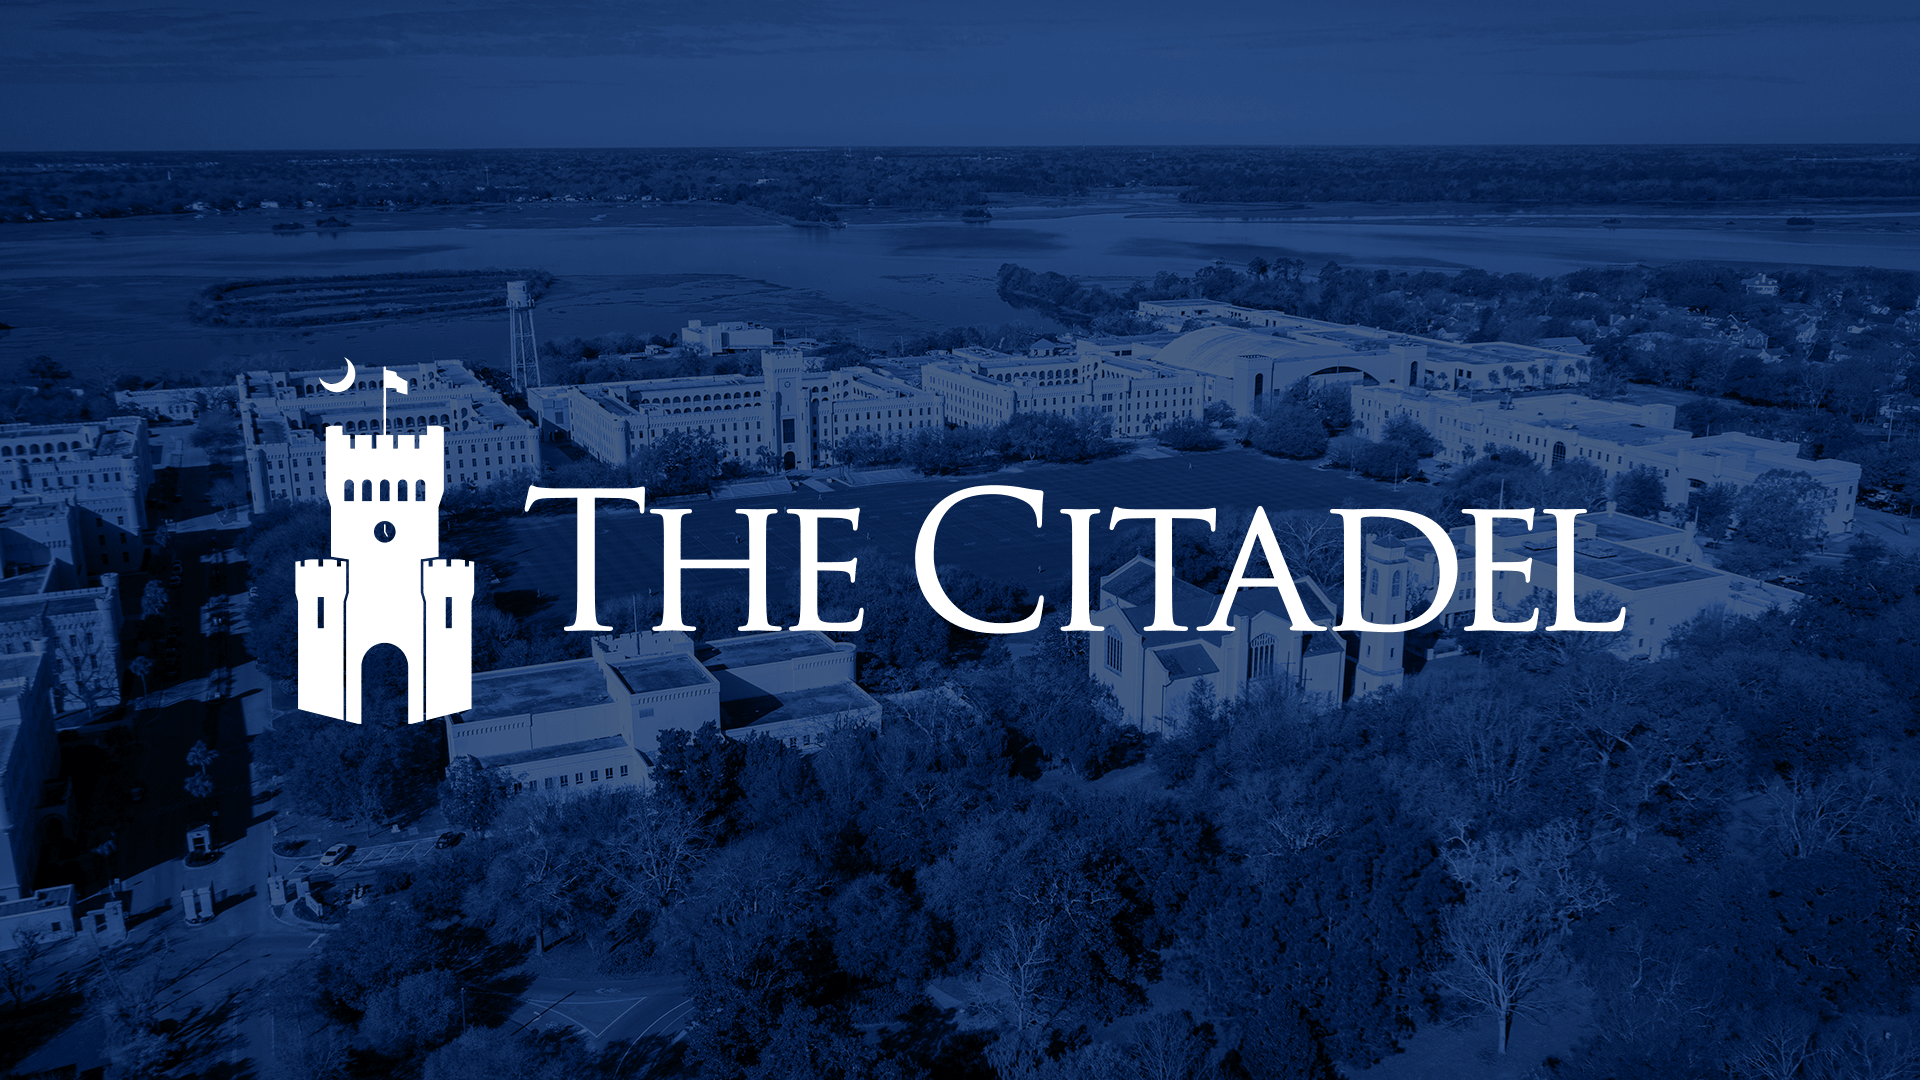 www.citadel.edu